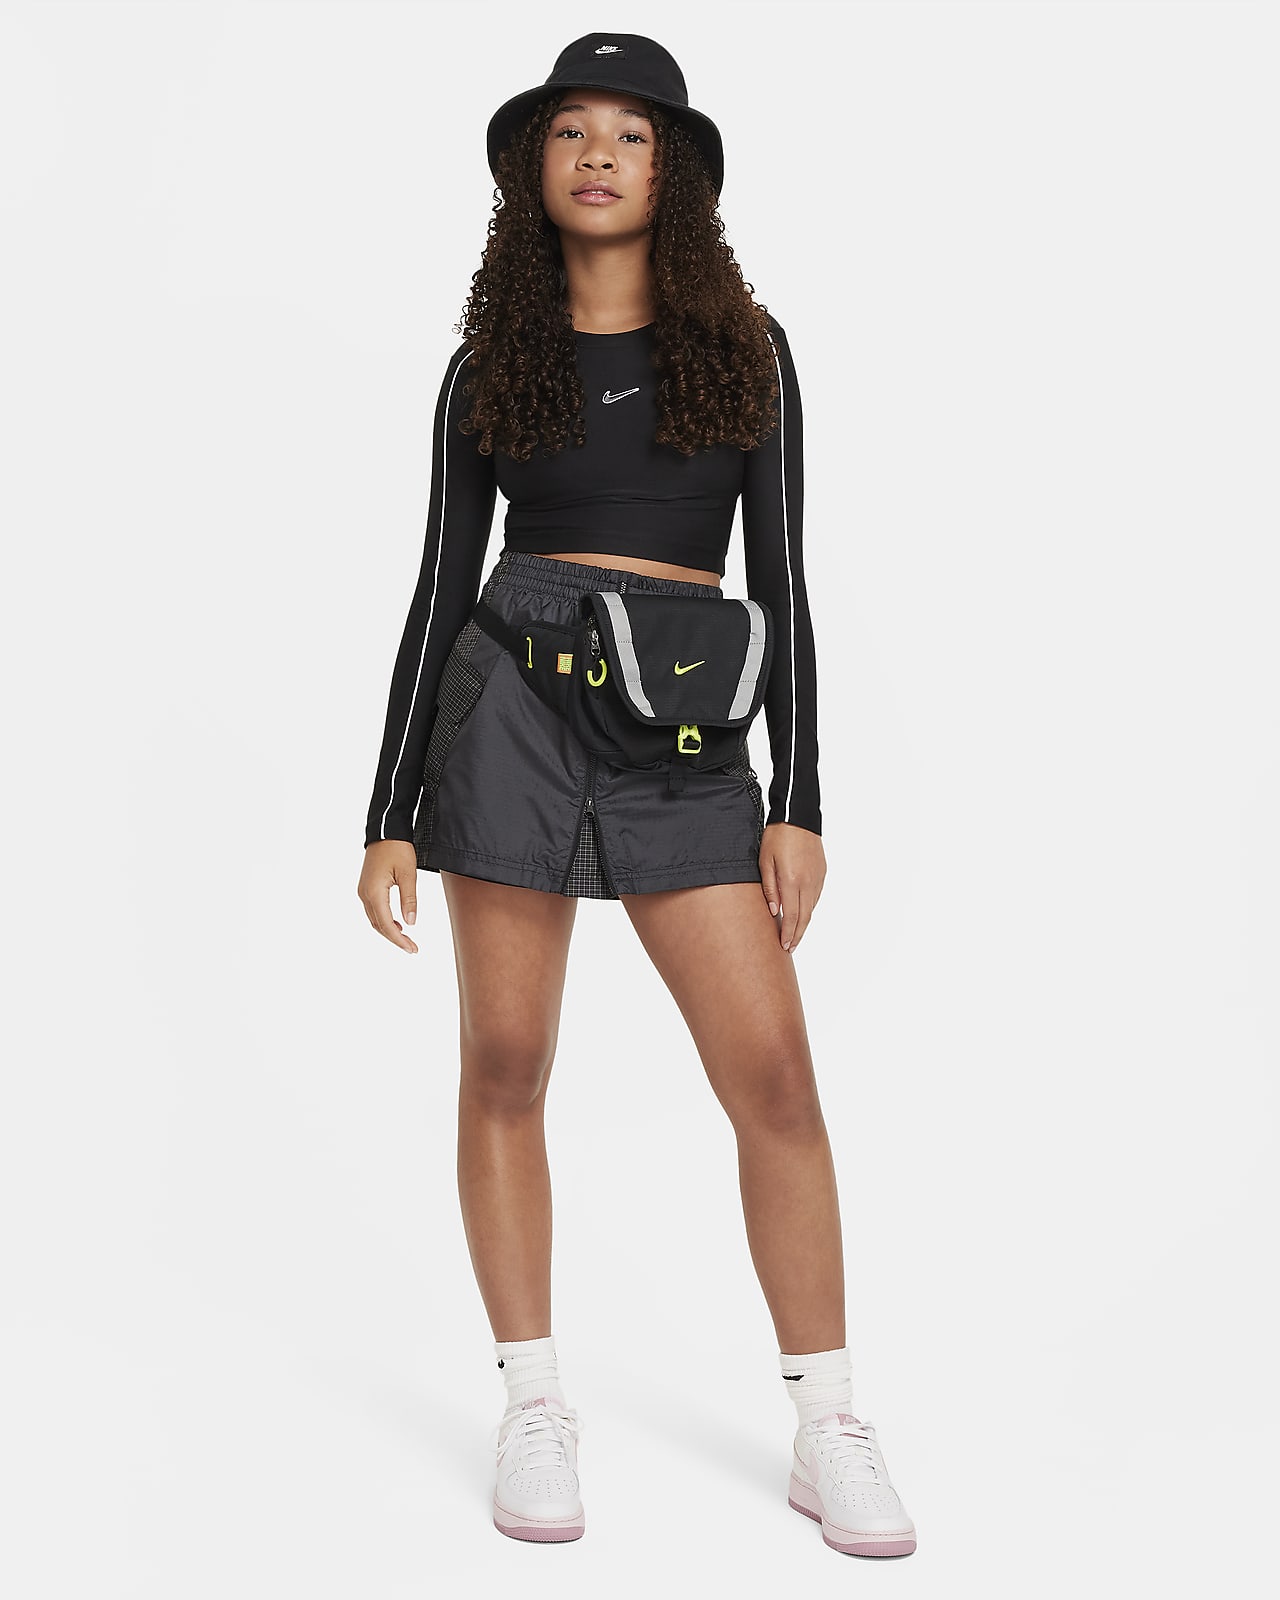 Nike Sportswear Older Kids' (Girls') Long-Sleeve Cropped Top. Nike LU